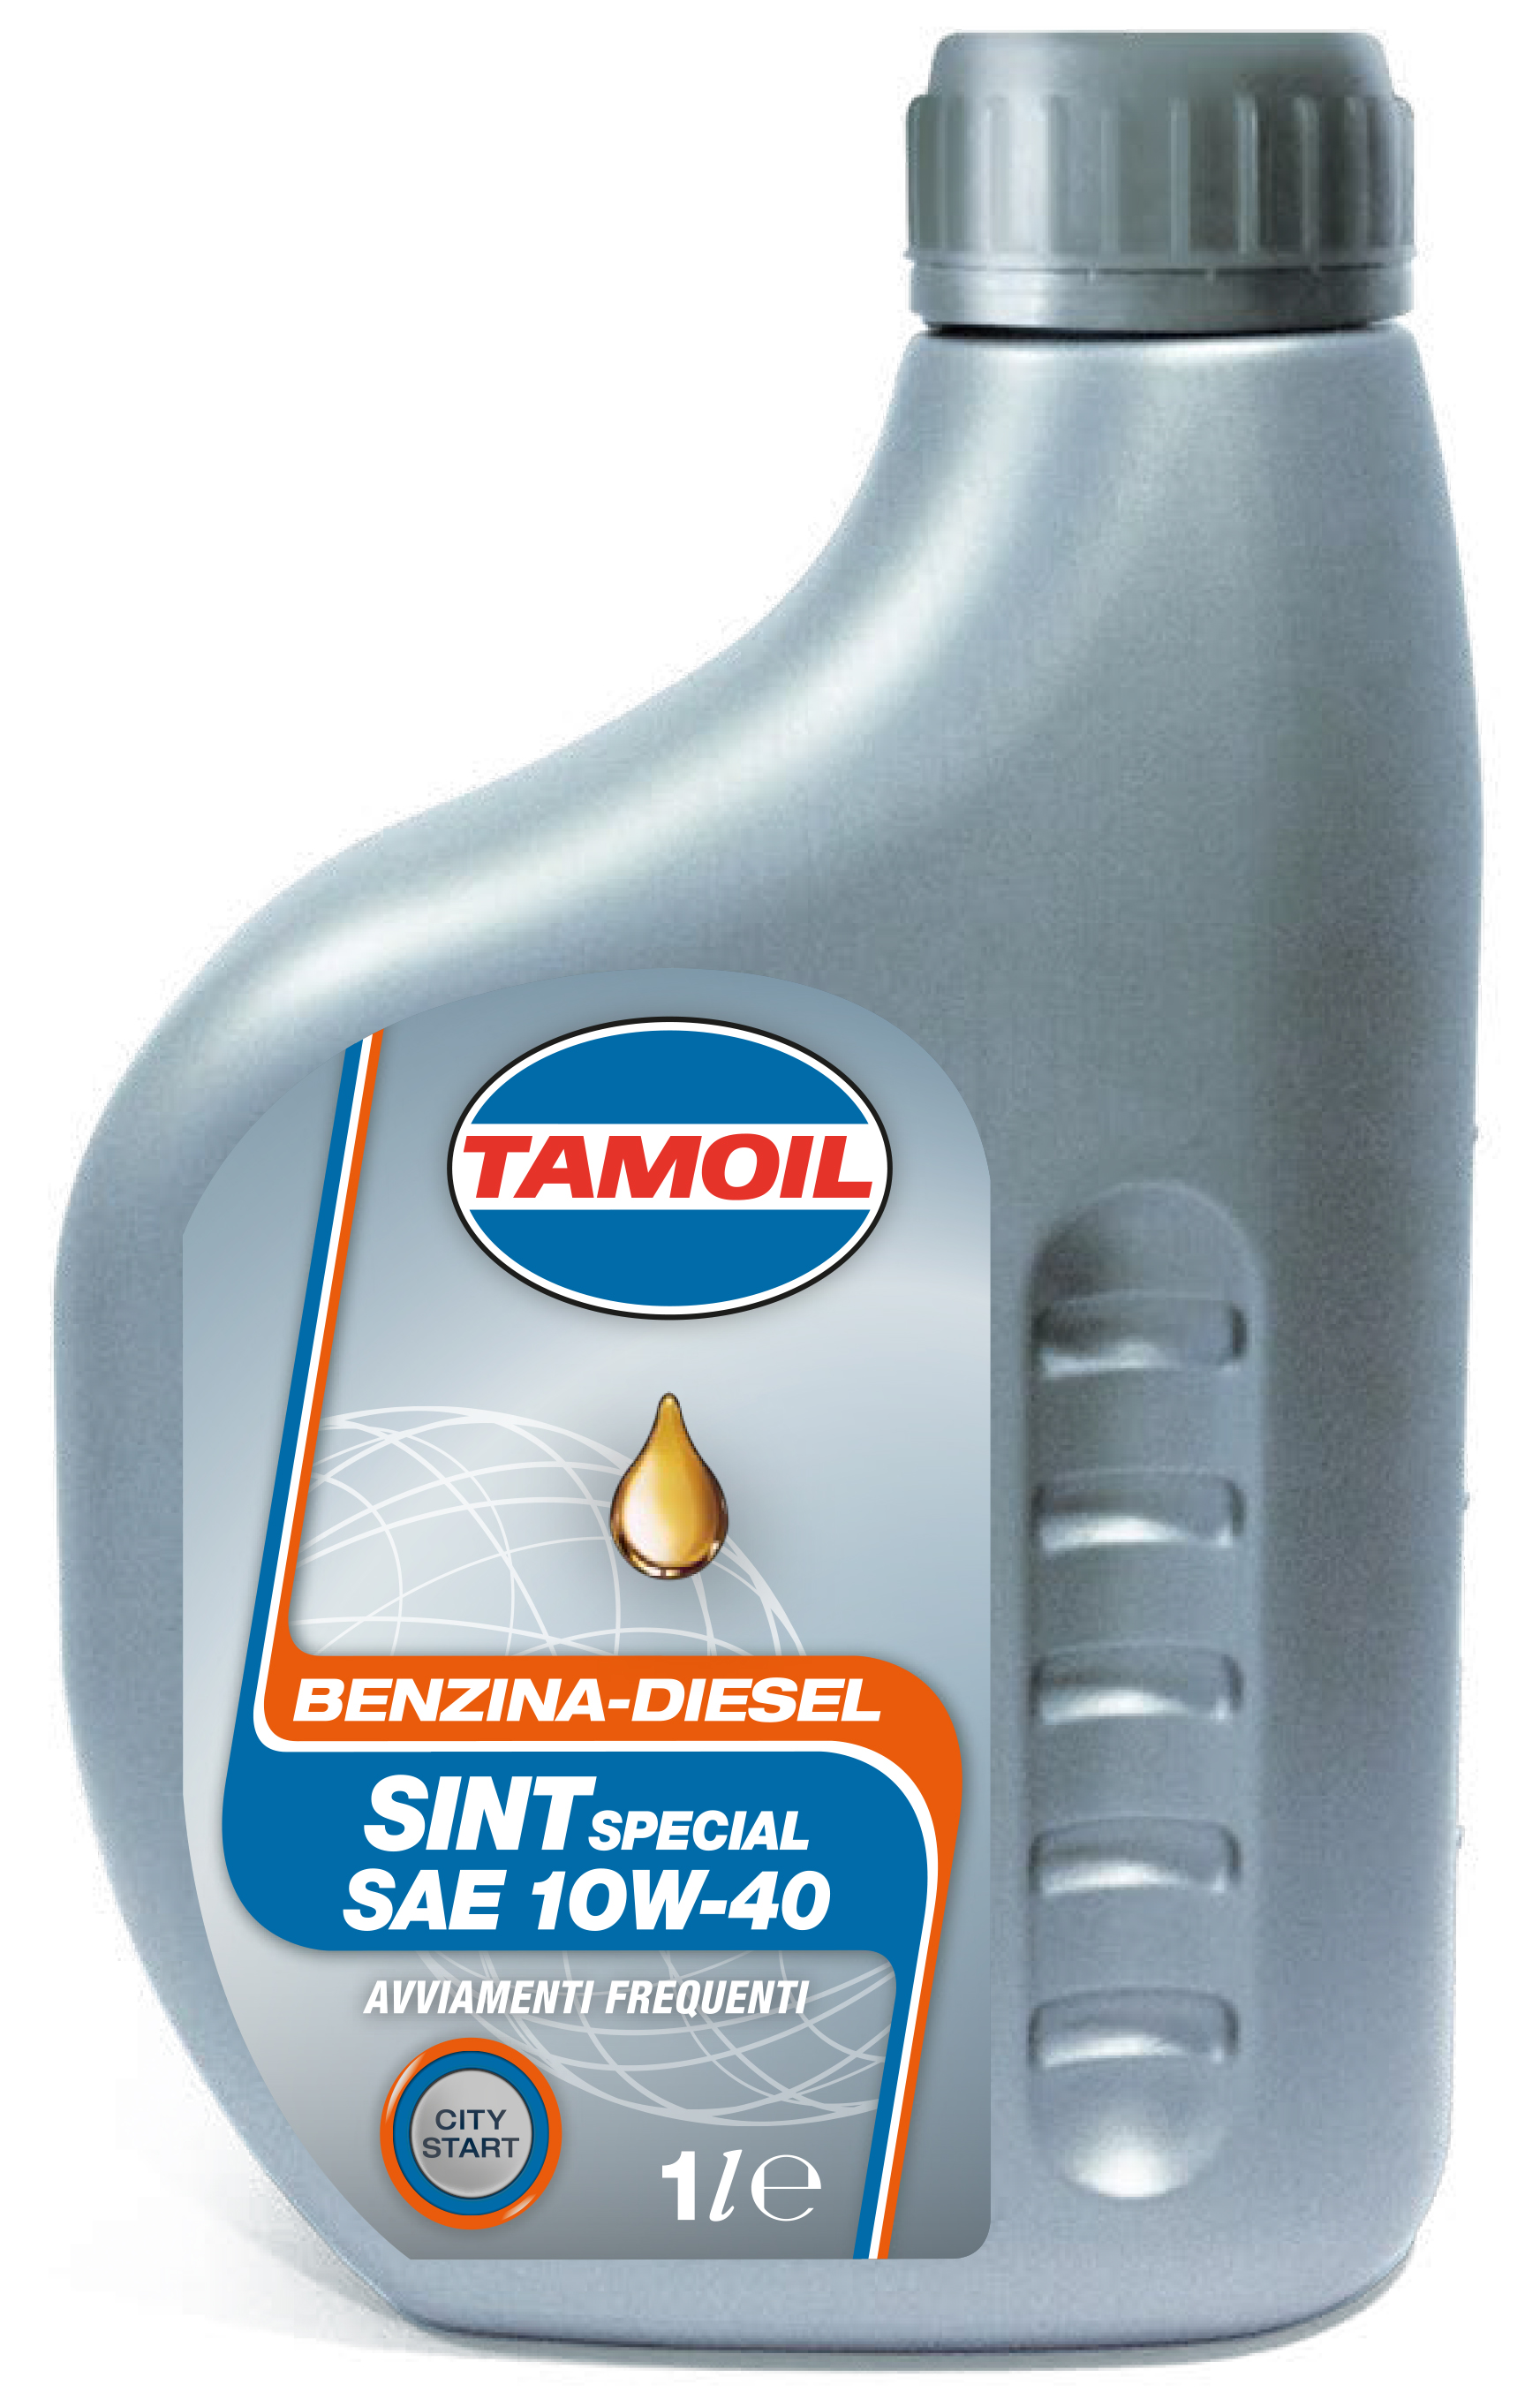 Tamoil City Start SAE 10W-40 B/D olio per motore 1 L Auto